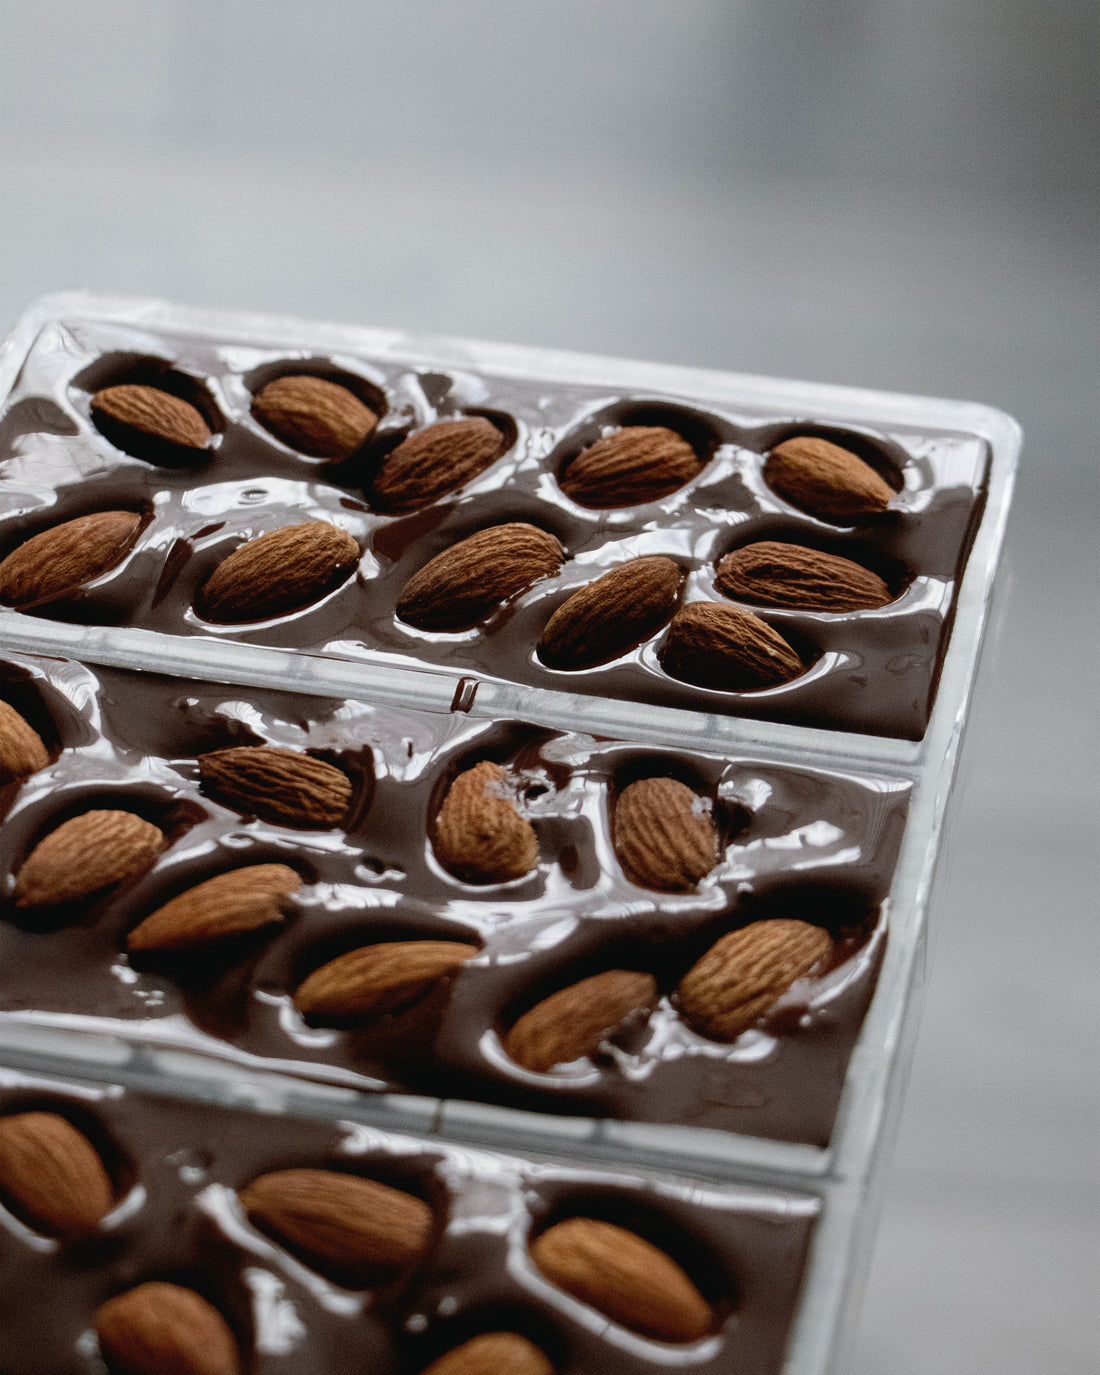 How to Make a Perfectly Balanced Chocolate Bar: A Comprehensive Guide